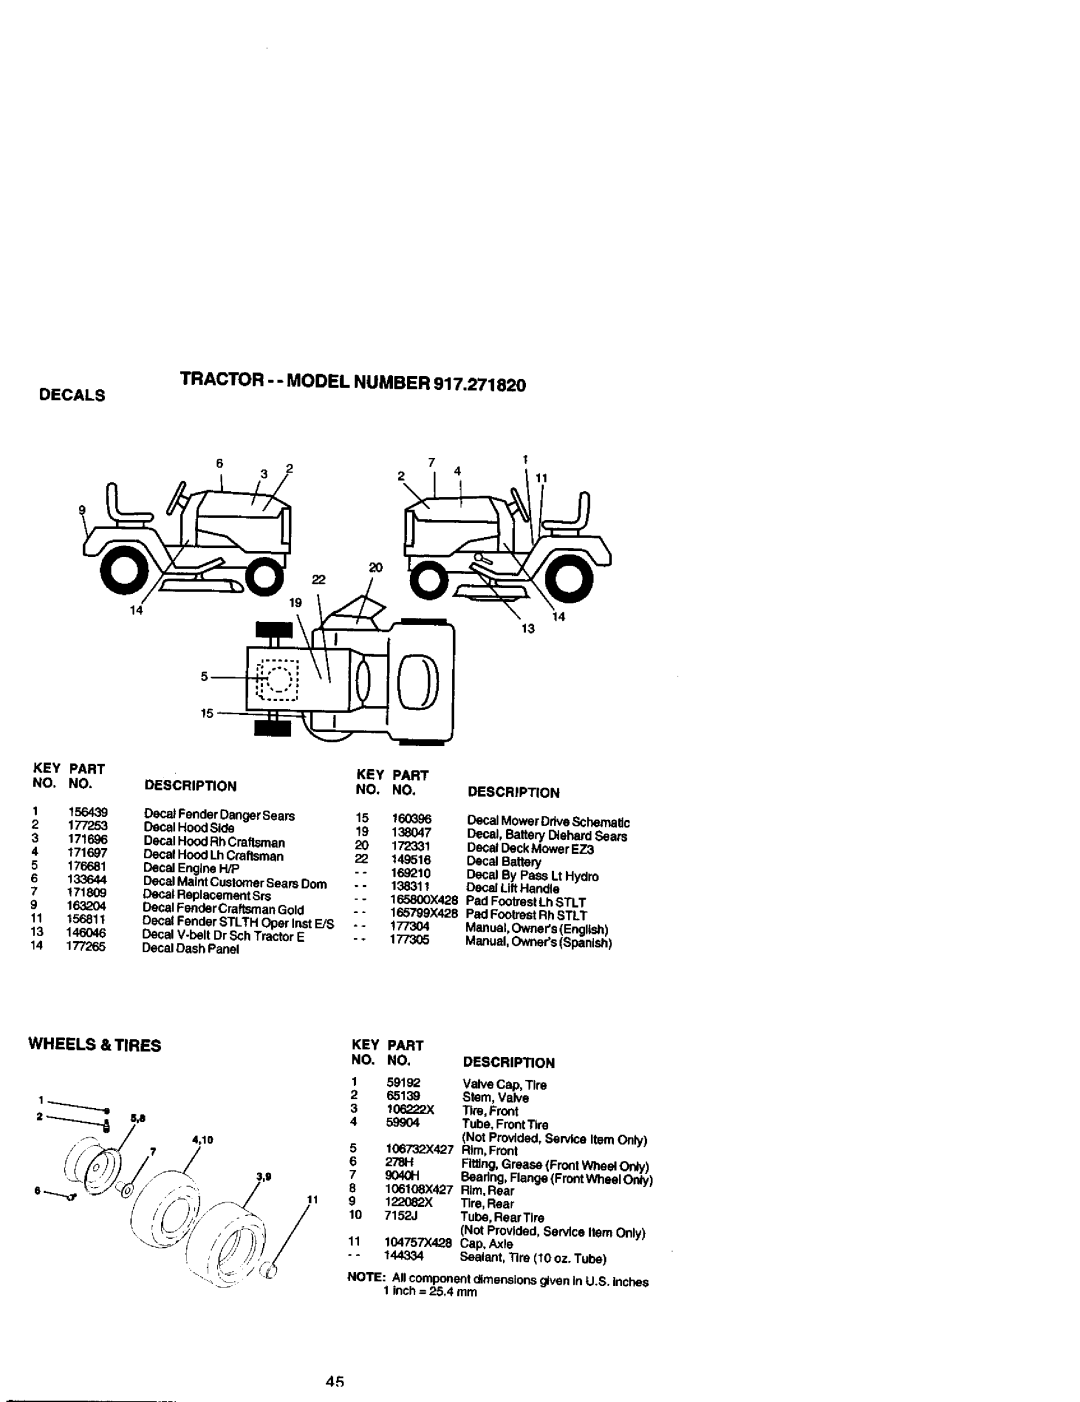 Craftsman 917.27182 manual Decals, Wheels & Tires 